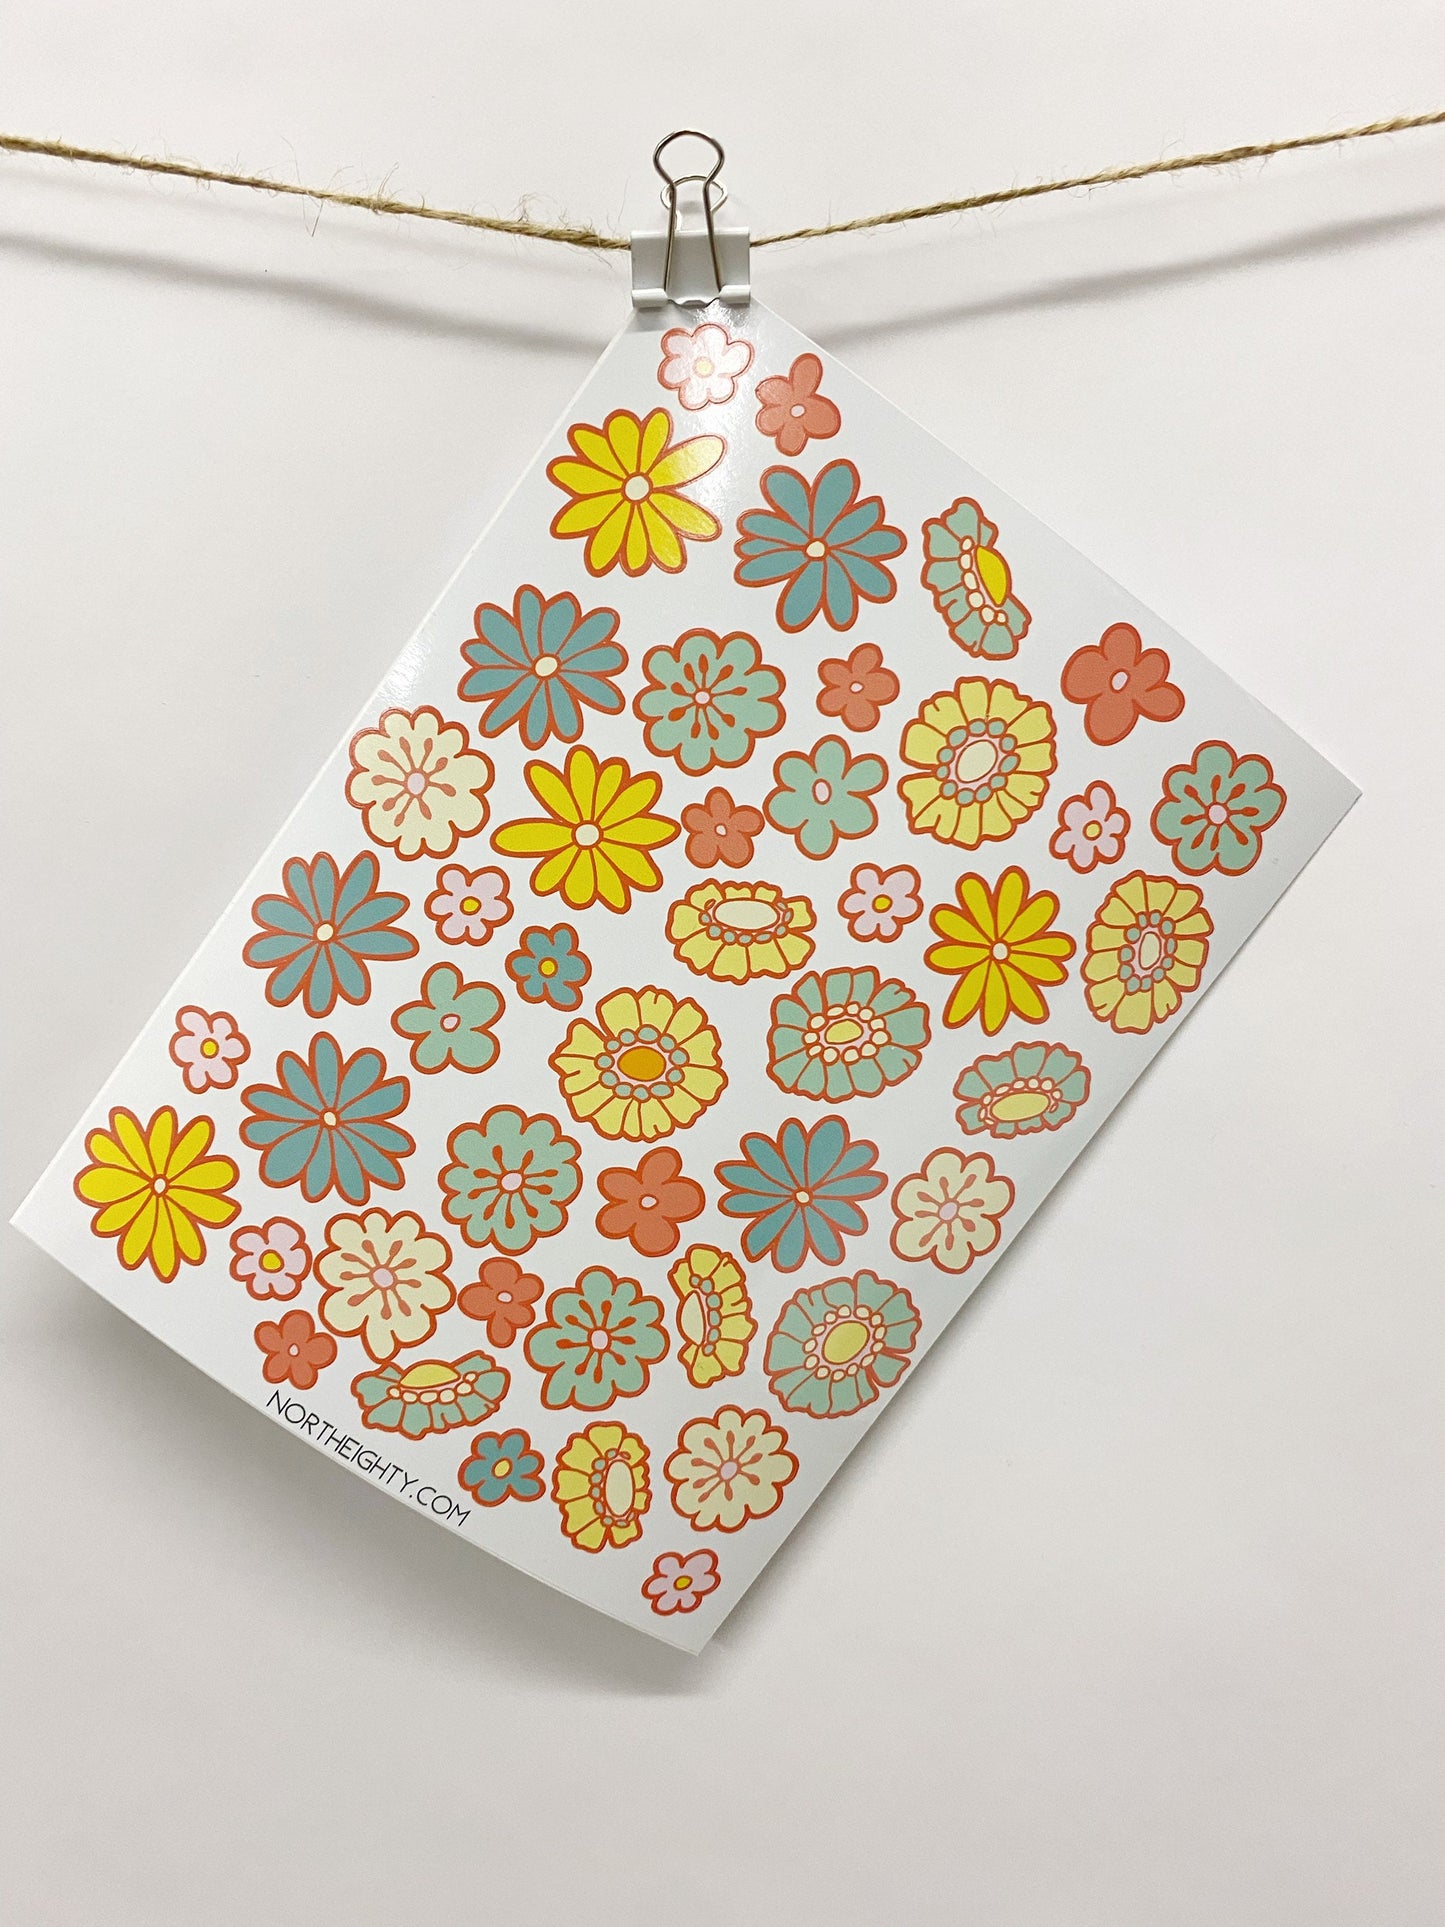 Sticker Sheet - Flower Decals - Daisy Stickers - Waterproof - Laptop - Tumbler Decals - Stand Mixer - Sticker Sheet - Flowers - Vinyl Decals